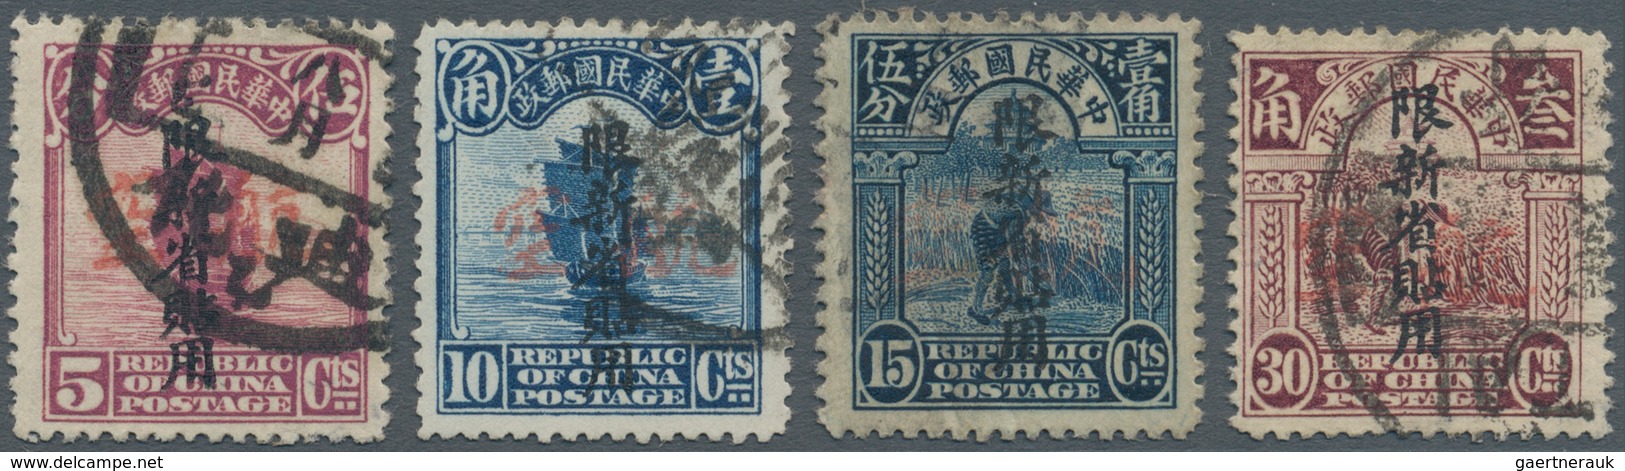 China - Provinzausgaben - Sinkiang (1915/45): 1932, Airmail Overprint Set, All Used "Tihwa", On Reve - Sinkiang 1915-49